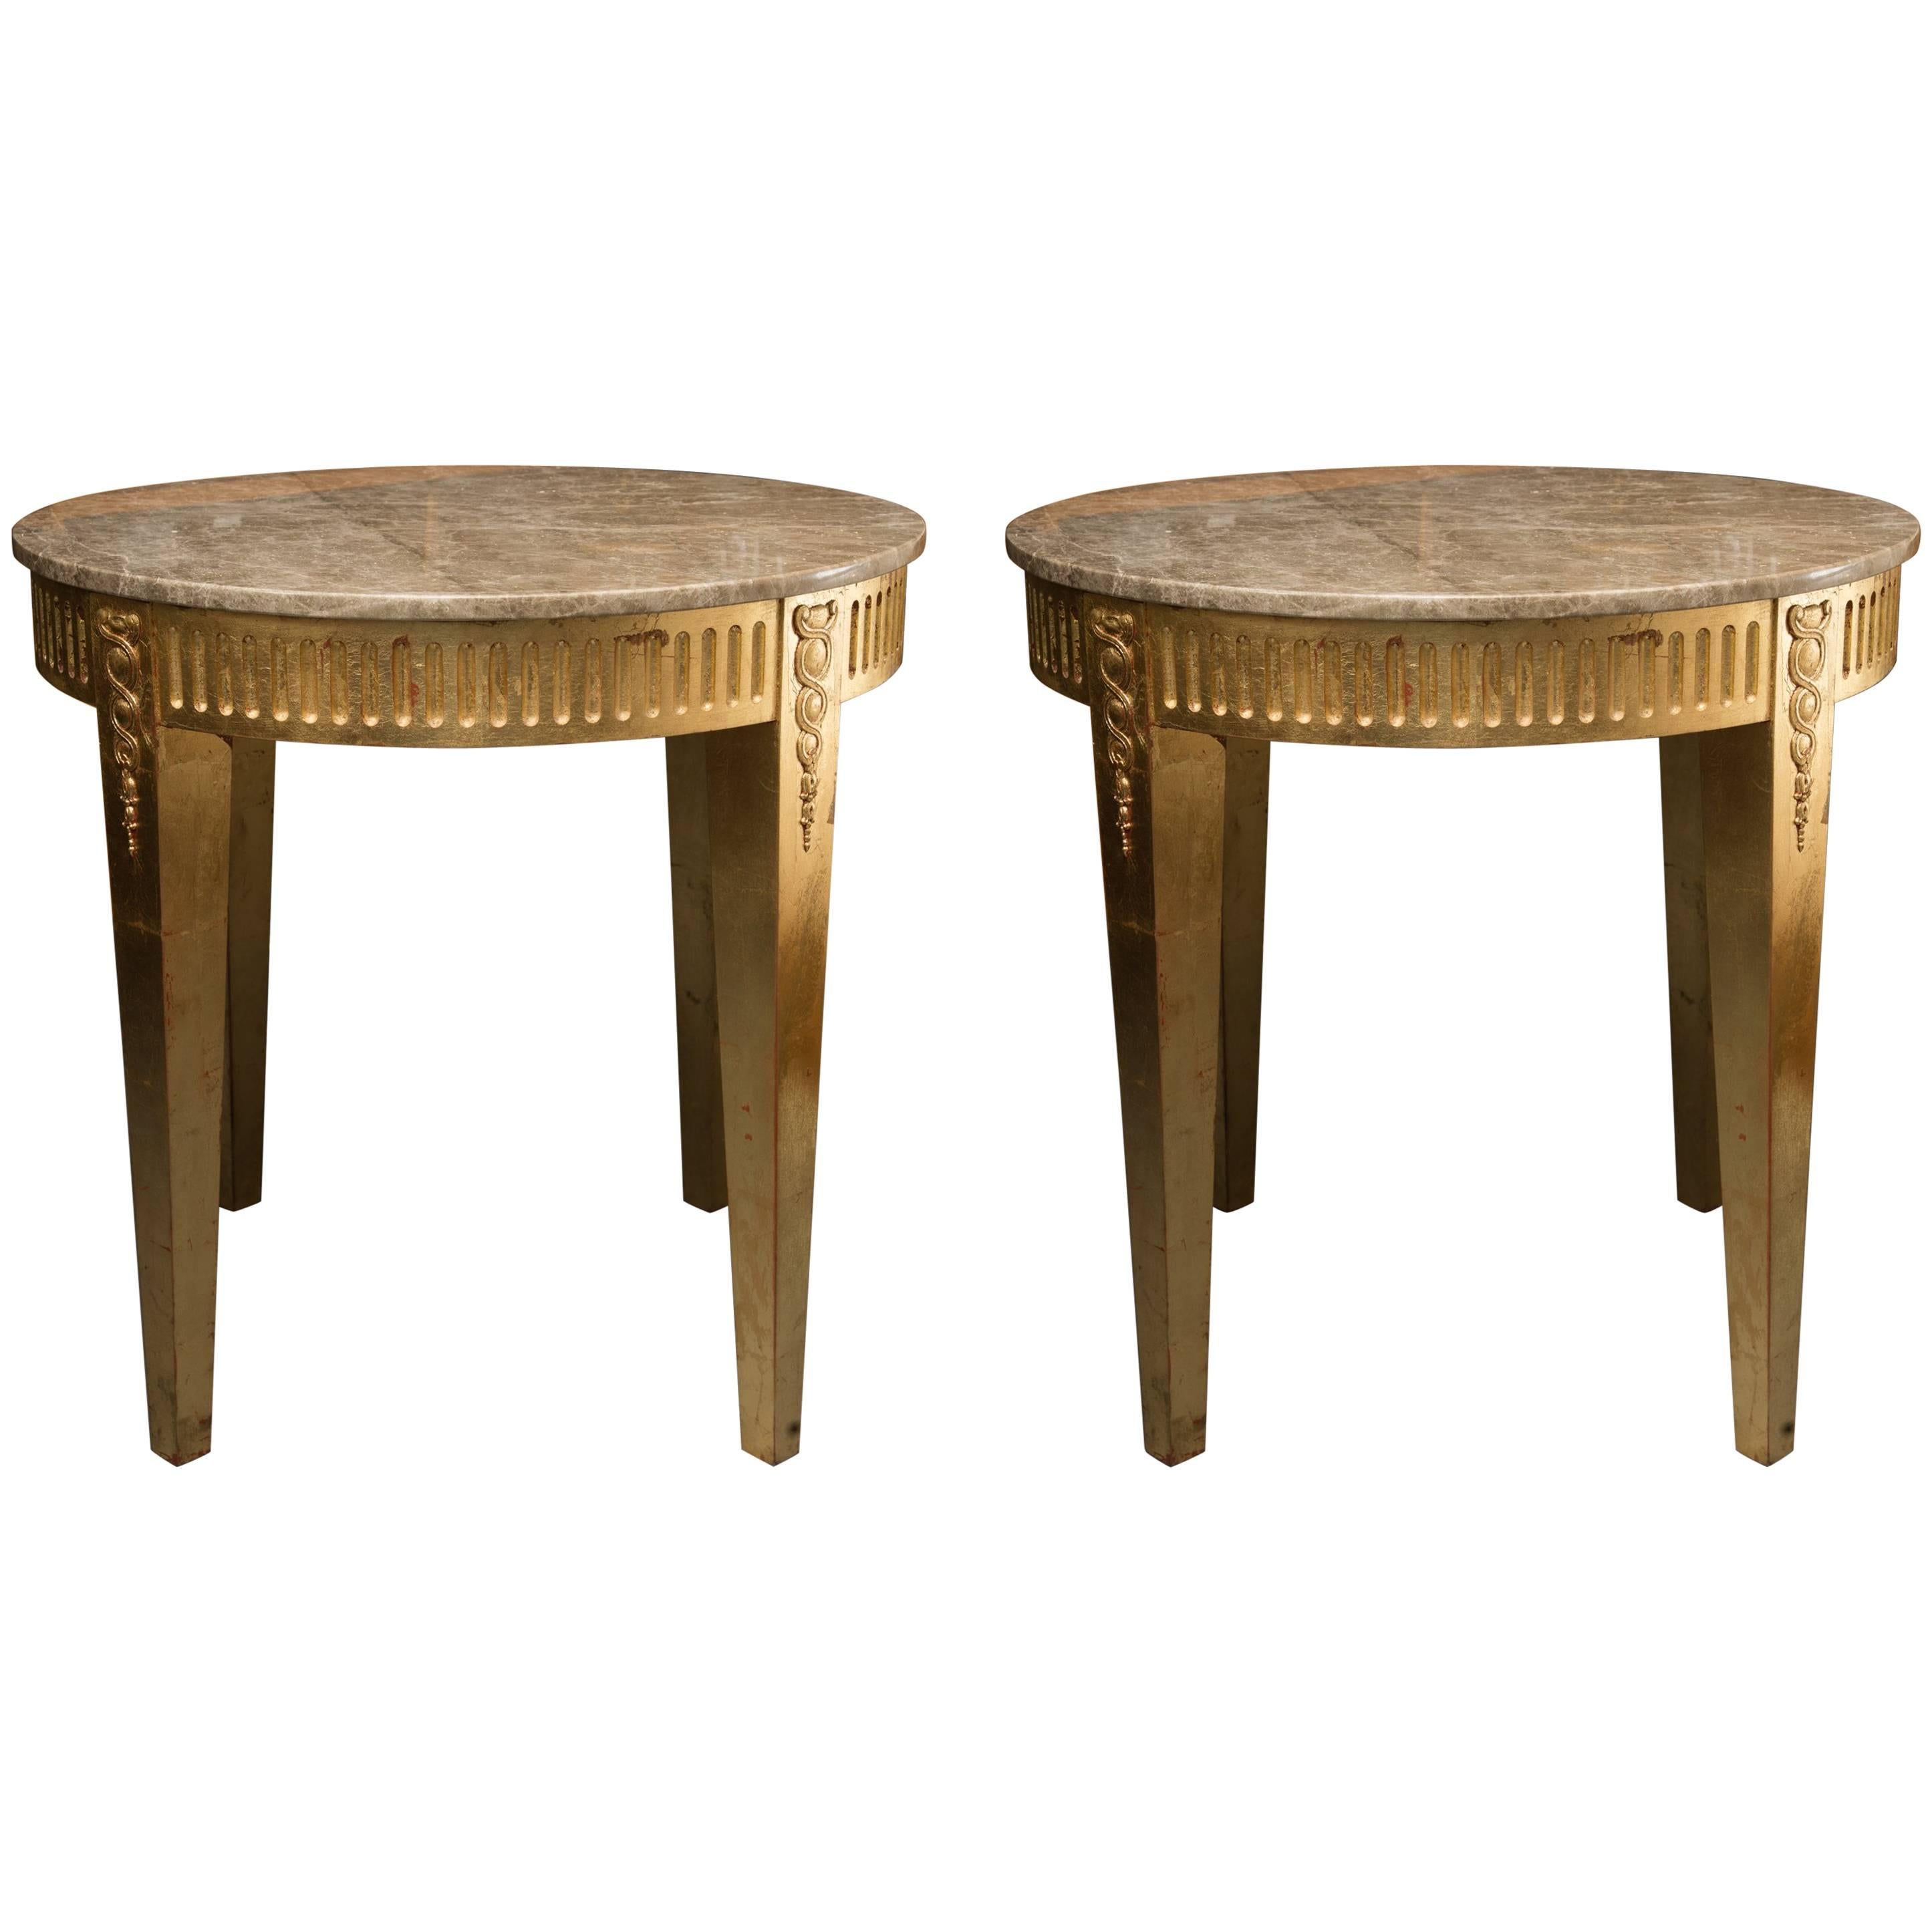 Pair of Giltwood Louis XVI Style Circular Tables